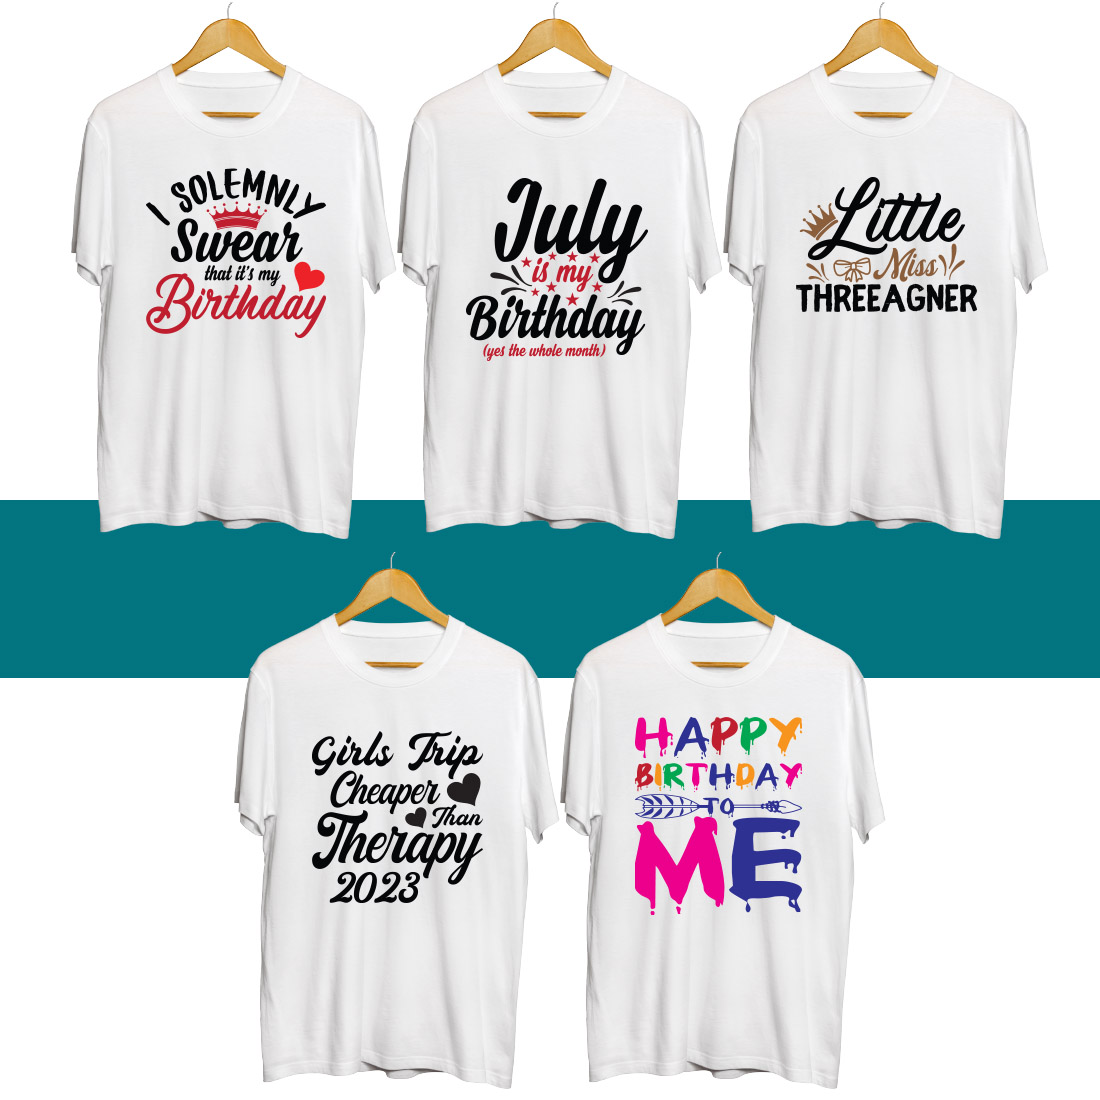 Birthday SVG T Shirt Designs Bundle cover image.